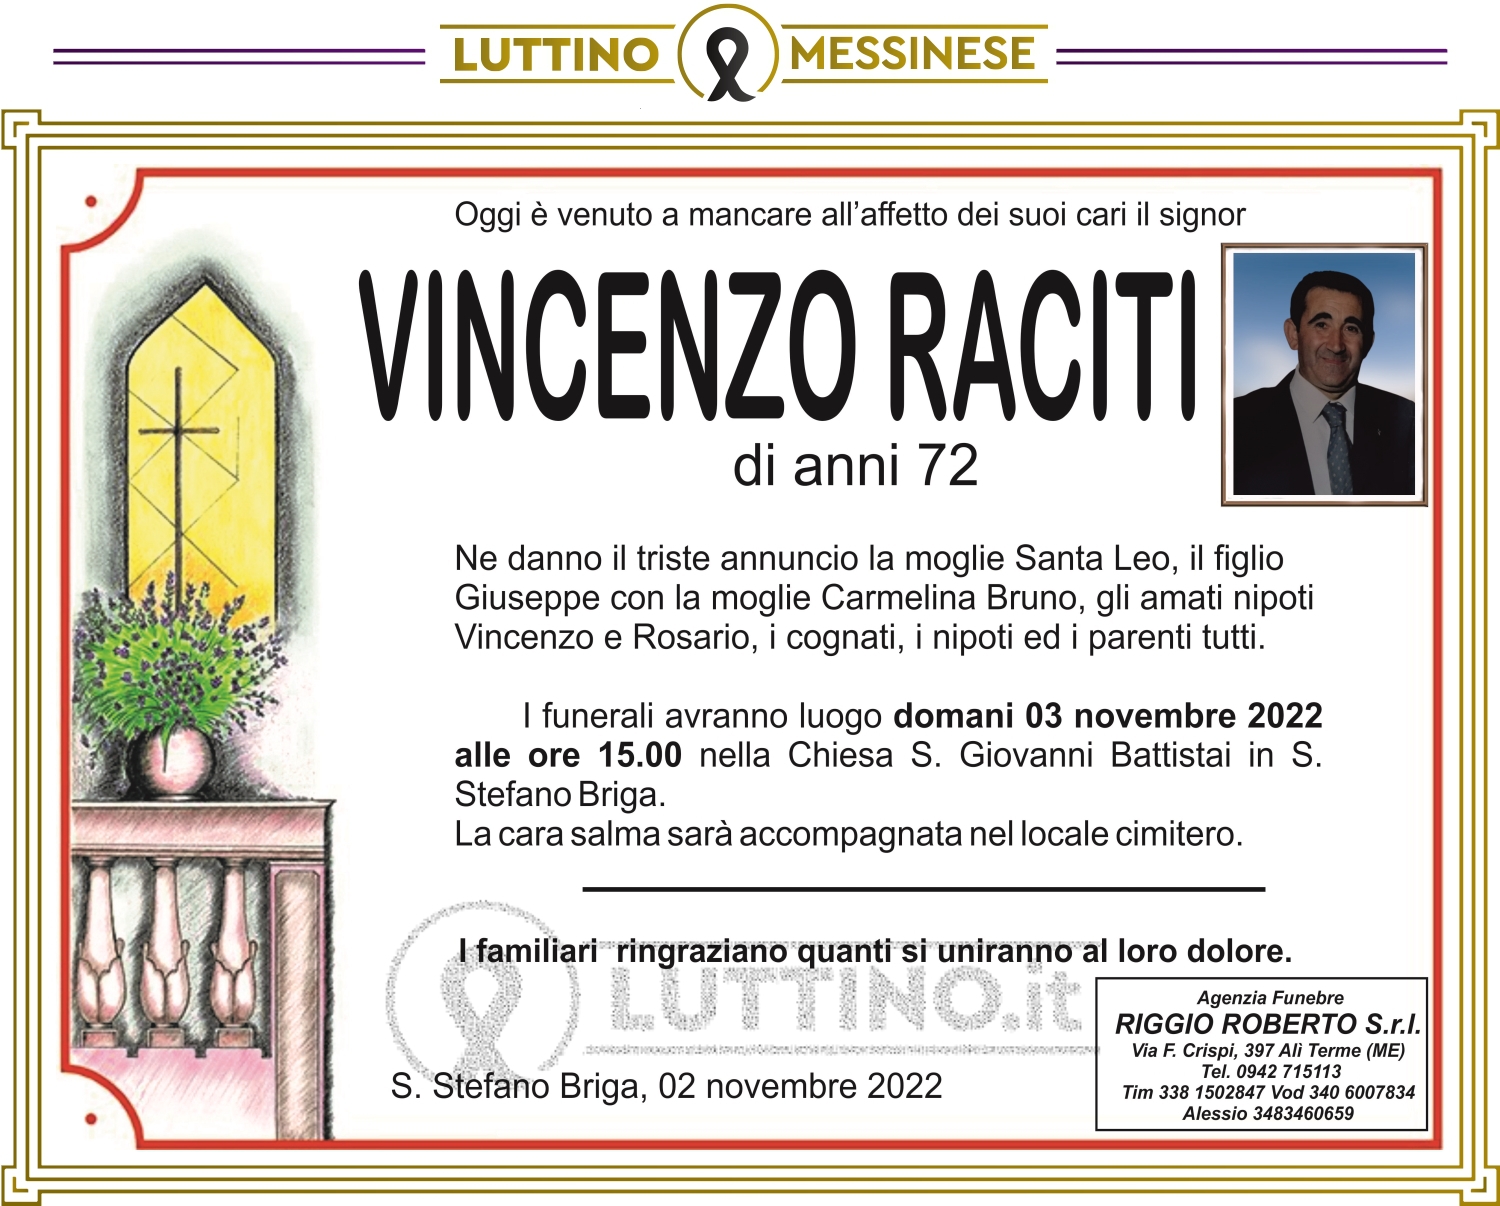 Vincenzo Raciti